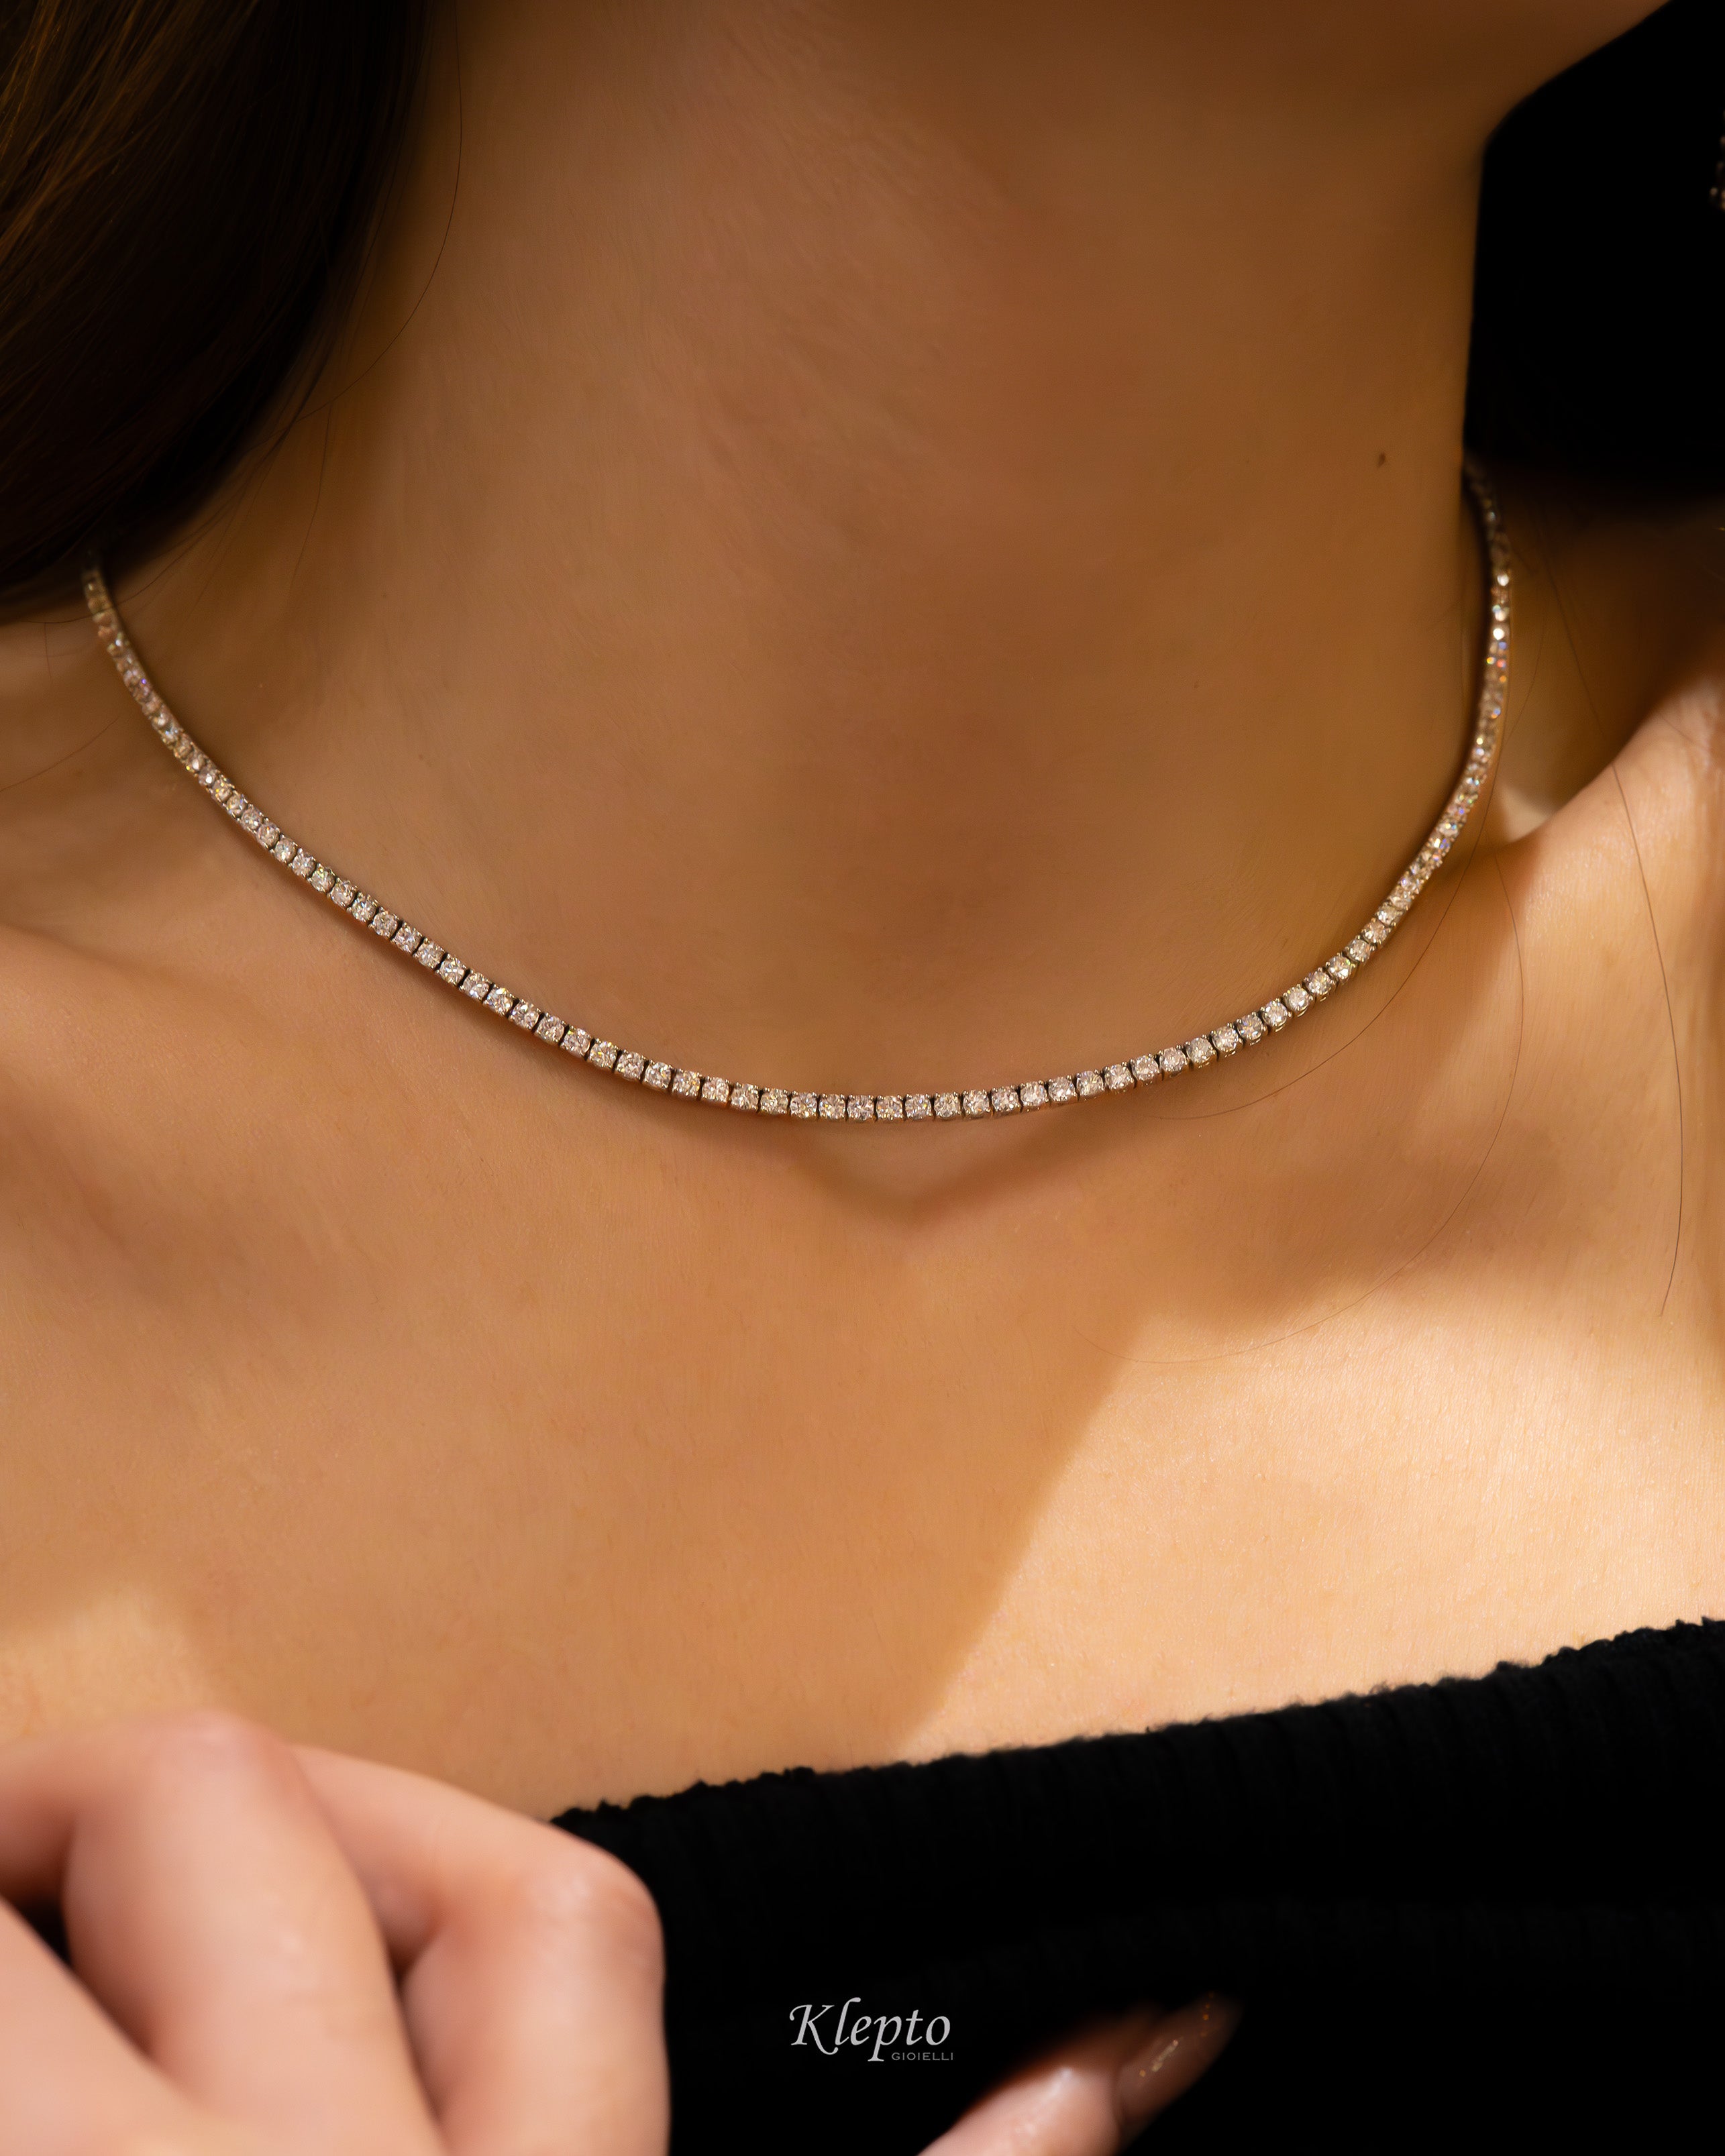 Tennis necklace with diamonds